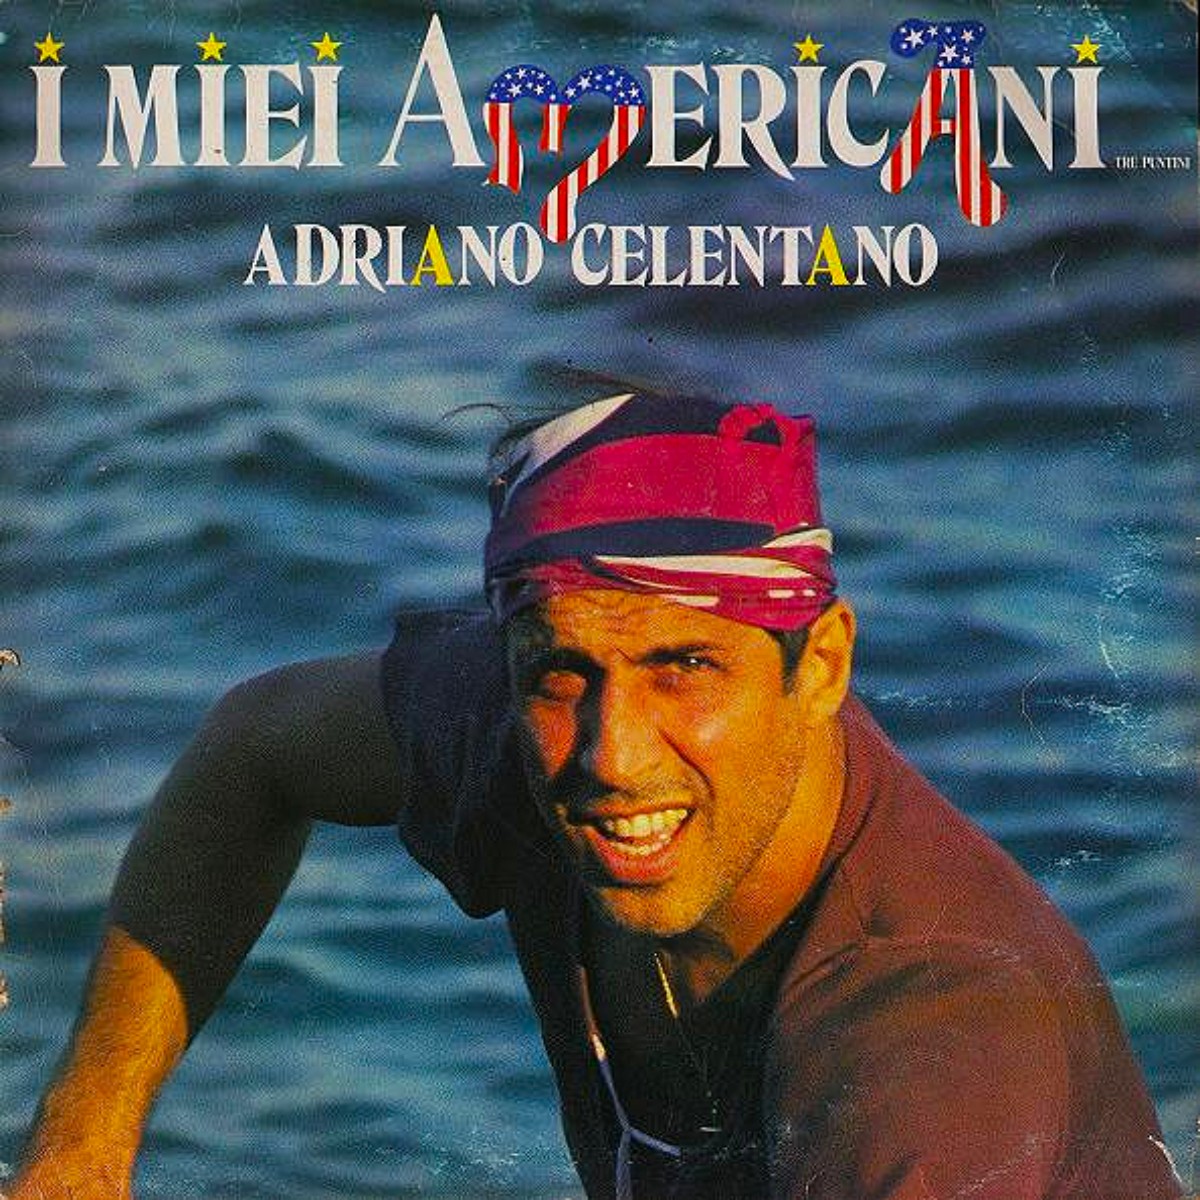 Адриано Челентано, альбом I miei americani